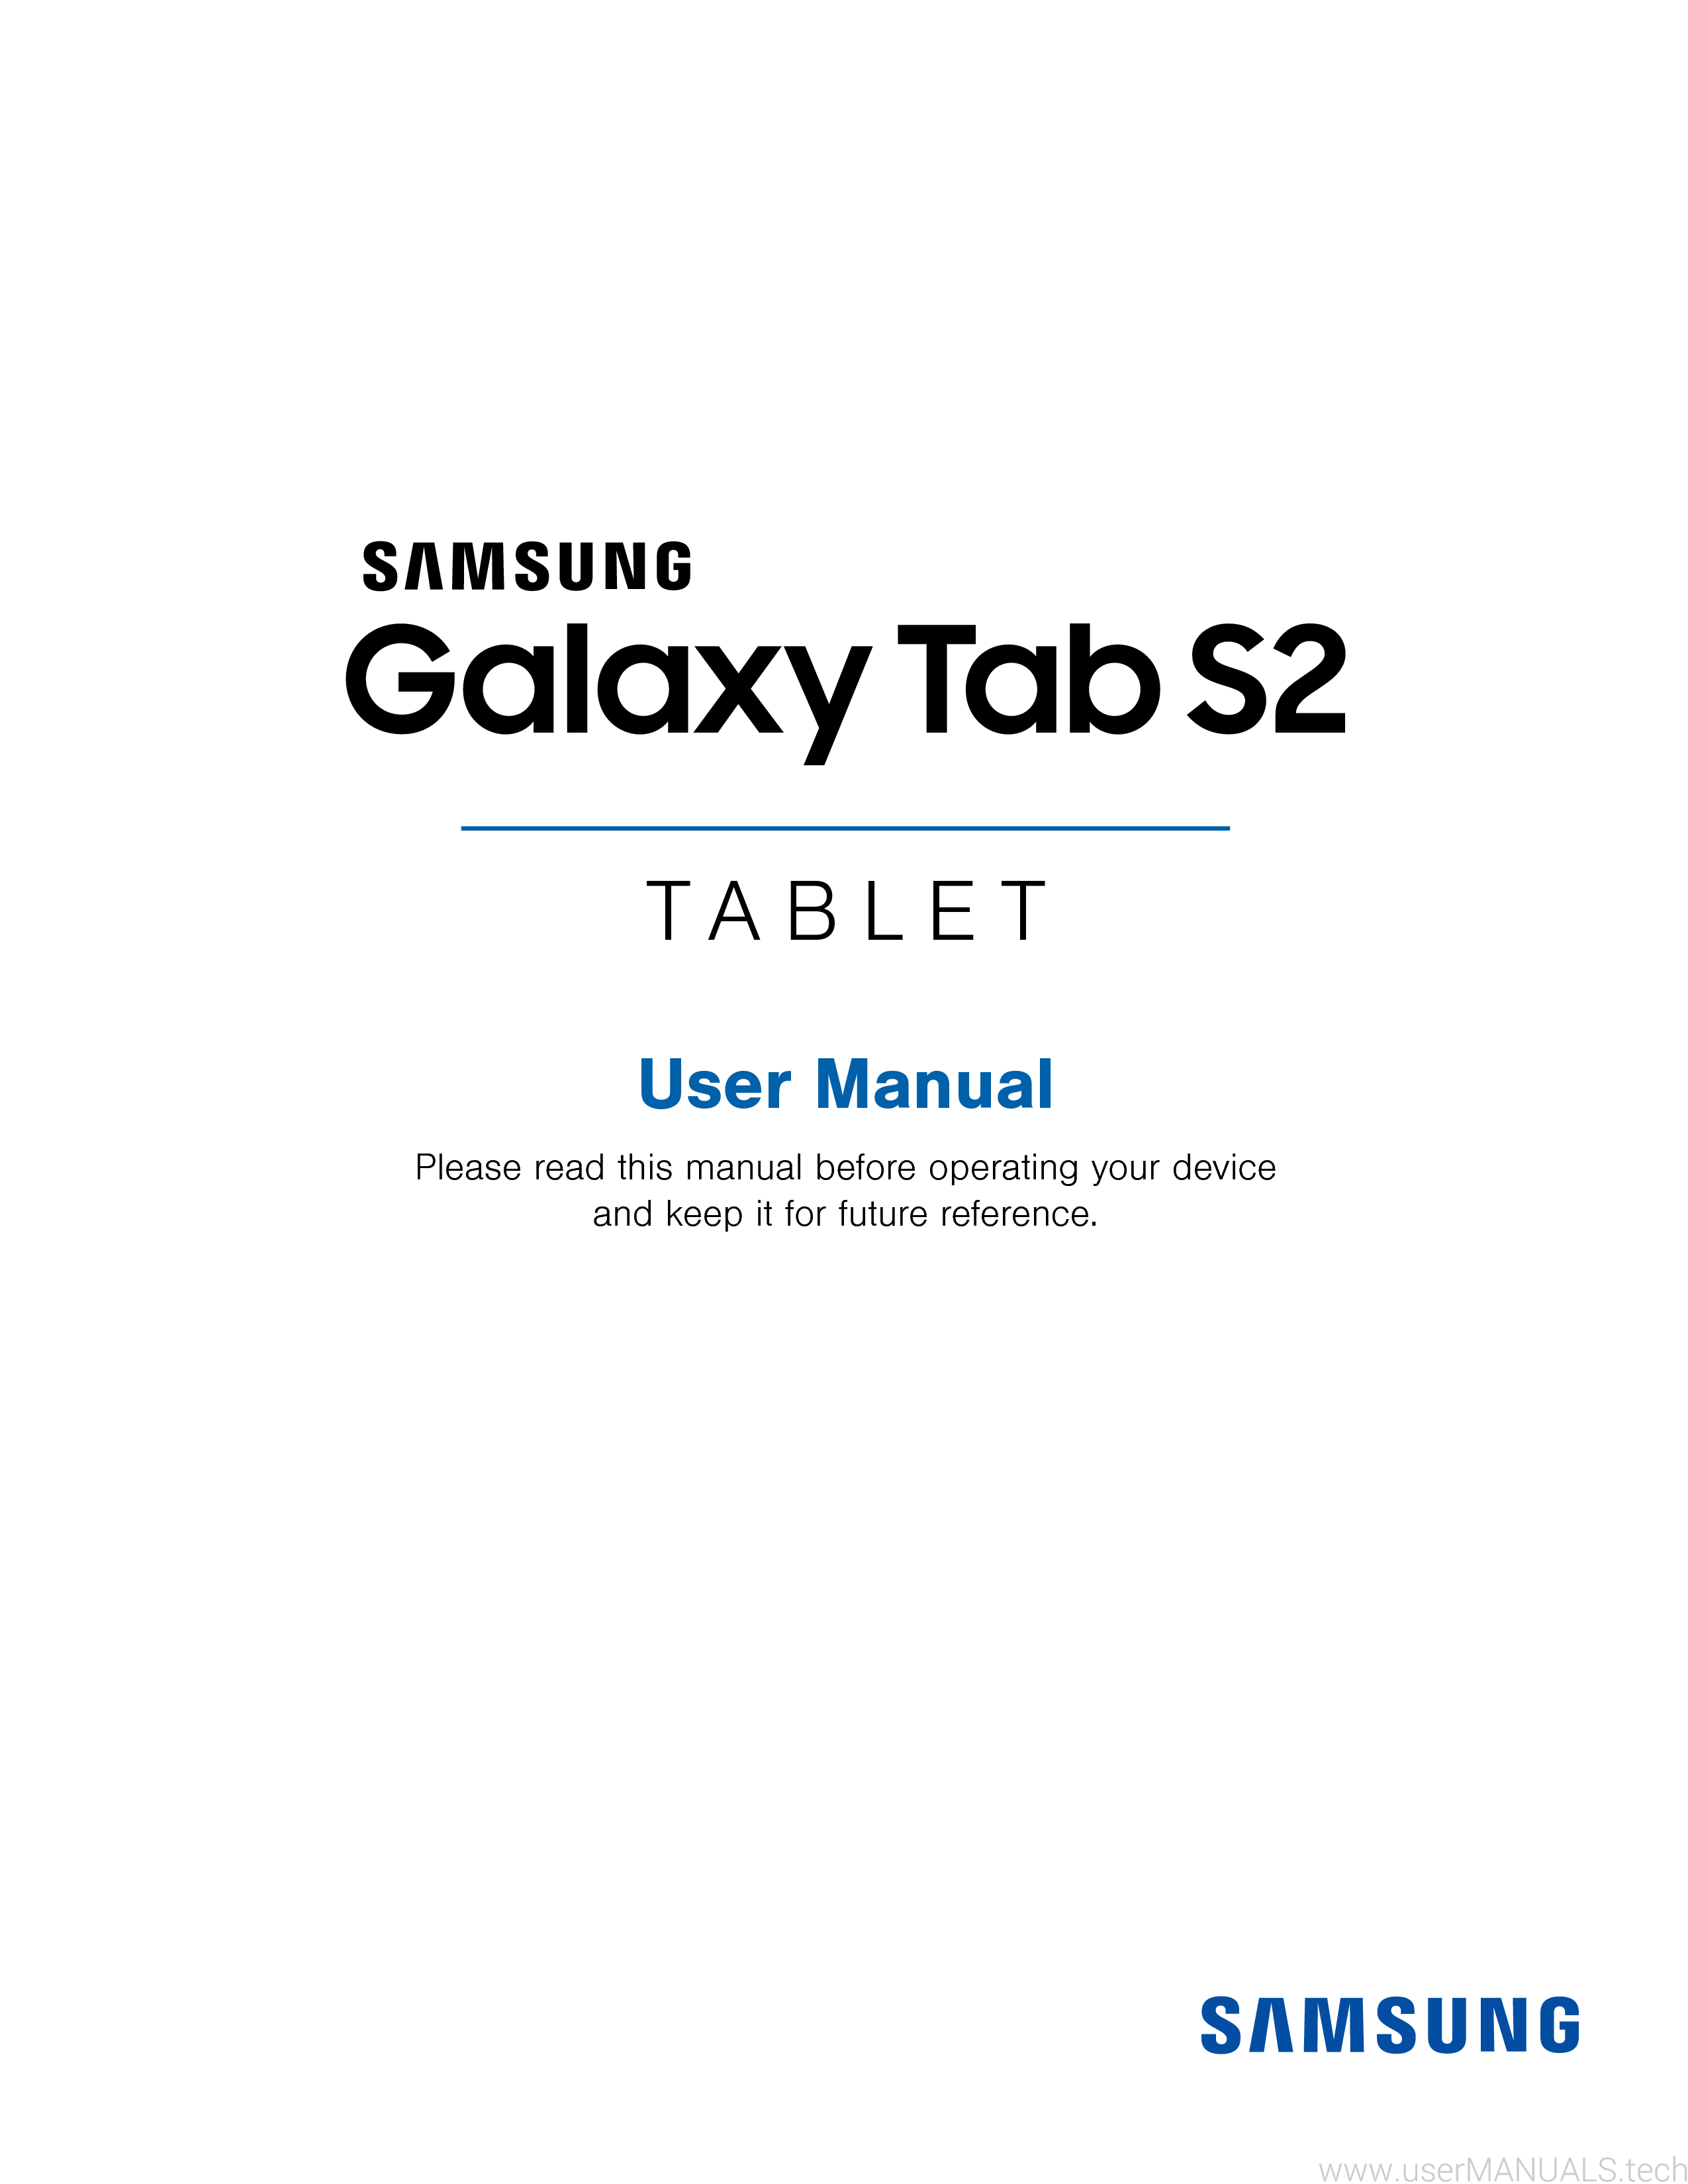 Samsung Galaxy Tab 2 Owners Manual